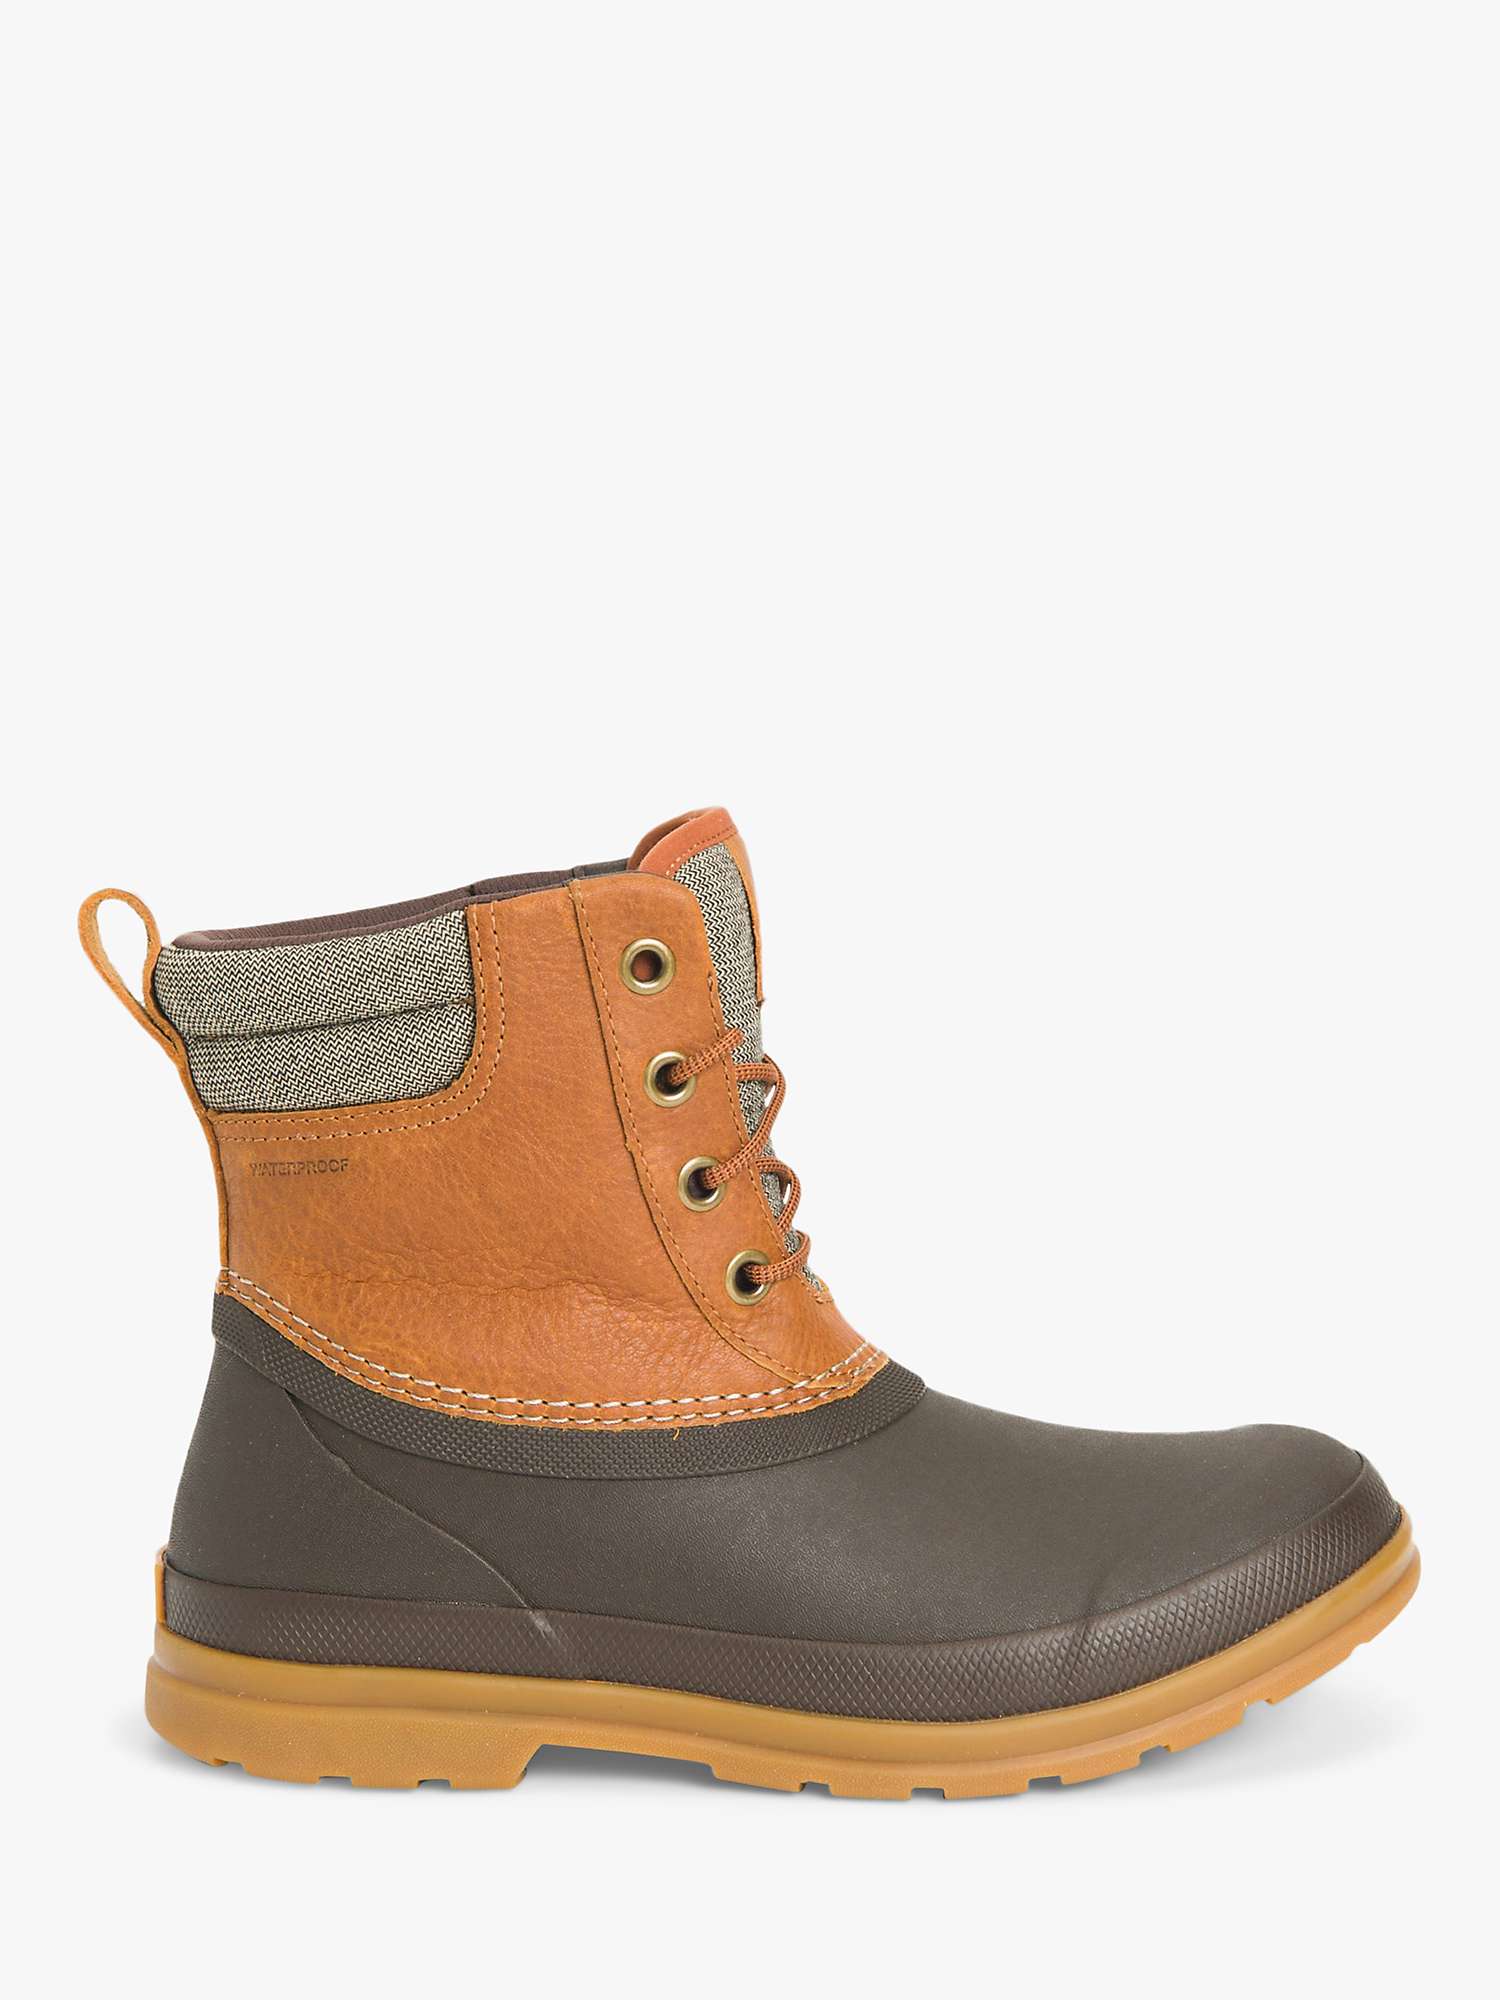 Buy Muck Originals Duck Lace Up Leather Short Boots, Tan/Dark Brown Online at johnlewis.com